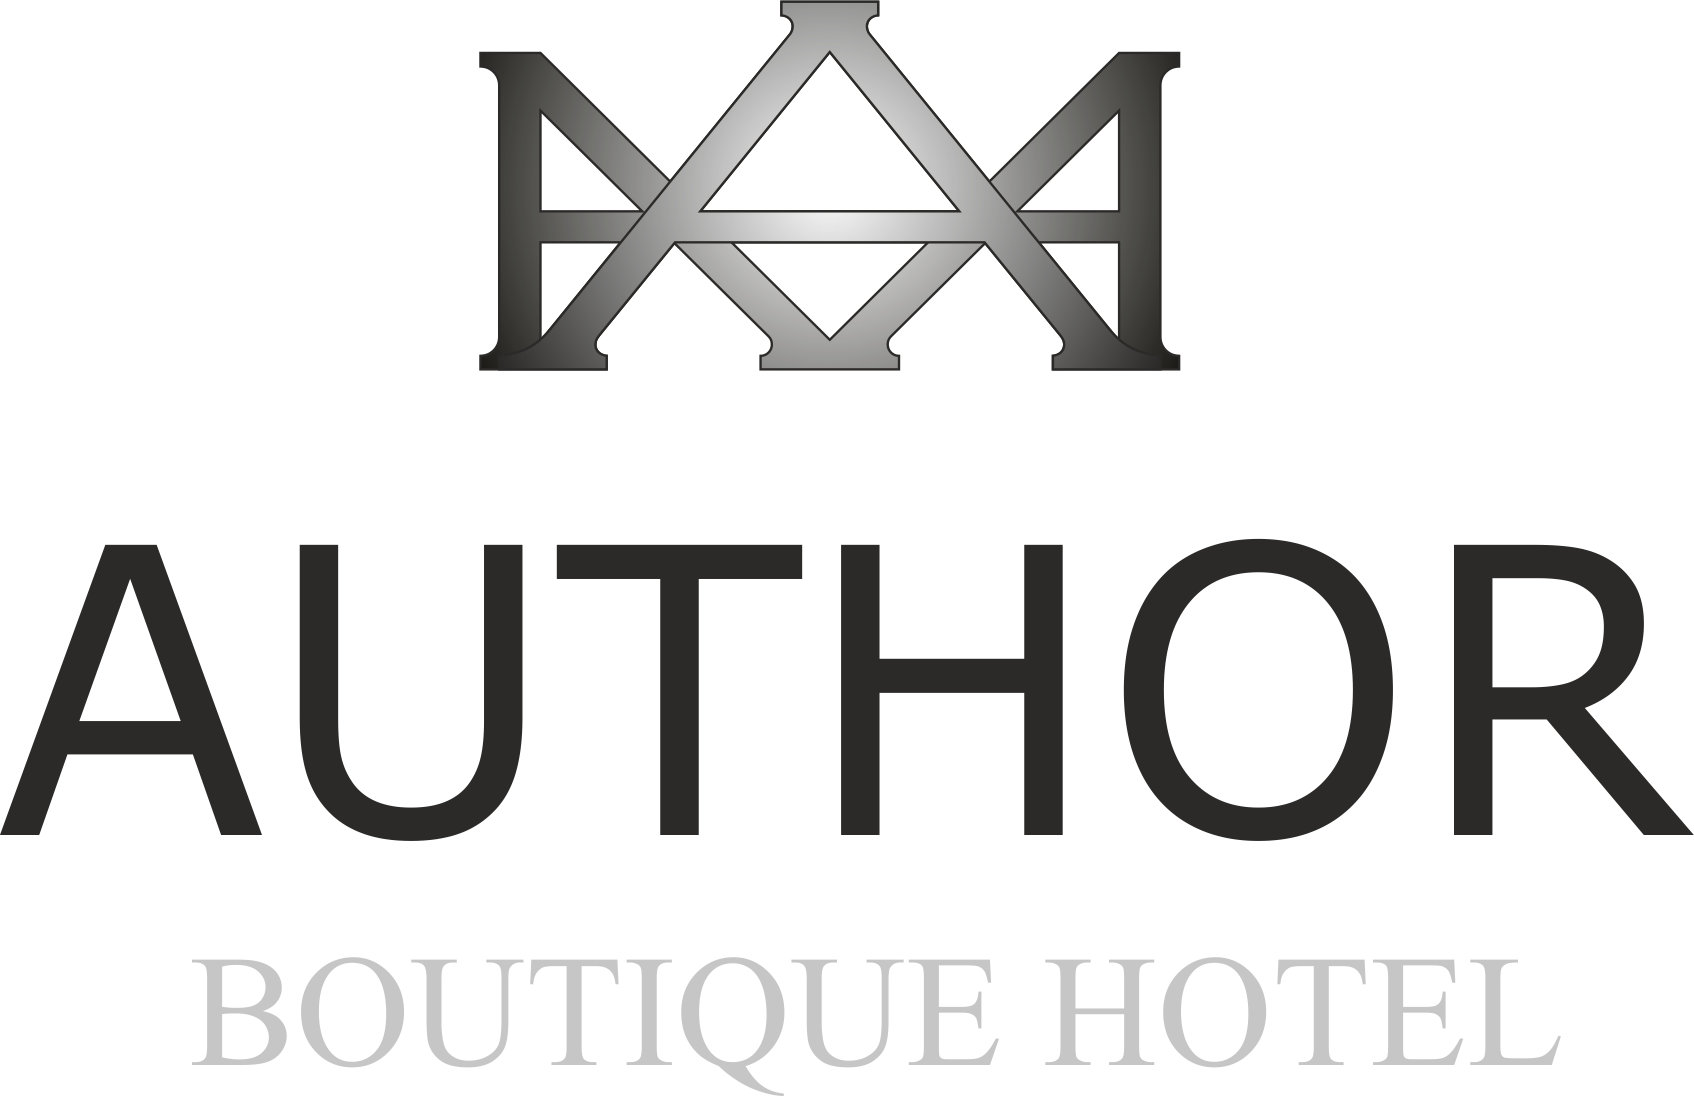 Author Boutique Hotel